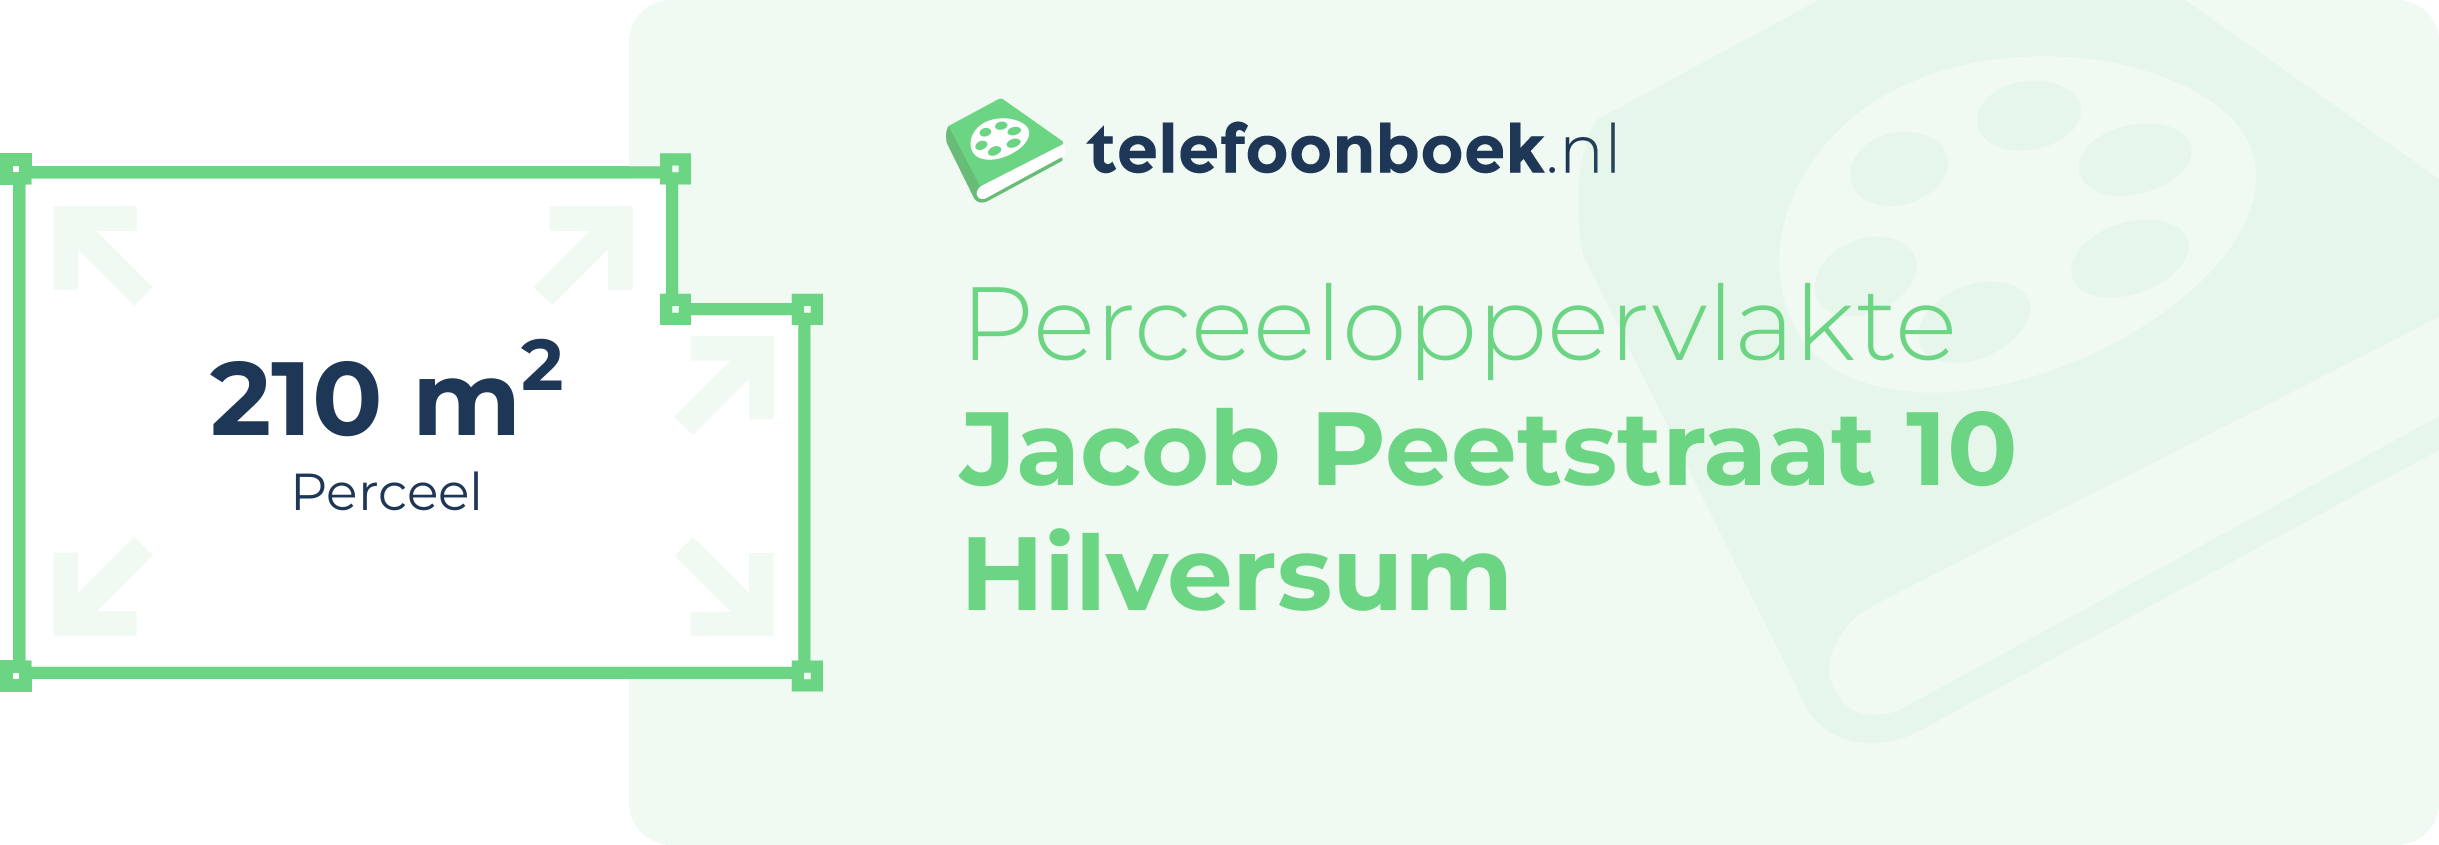 Perceeloppervlakte Jacob Peetstraat 10 Hilversum